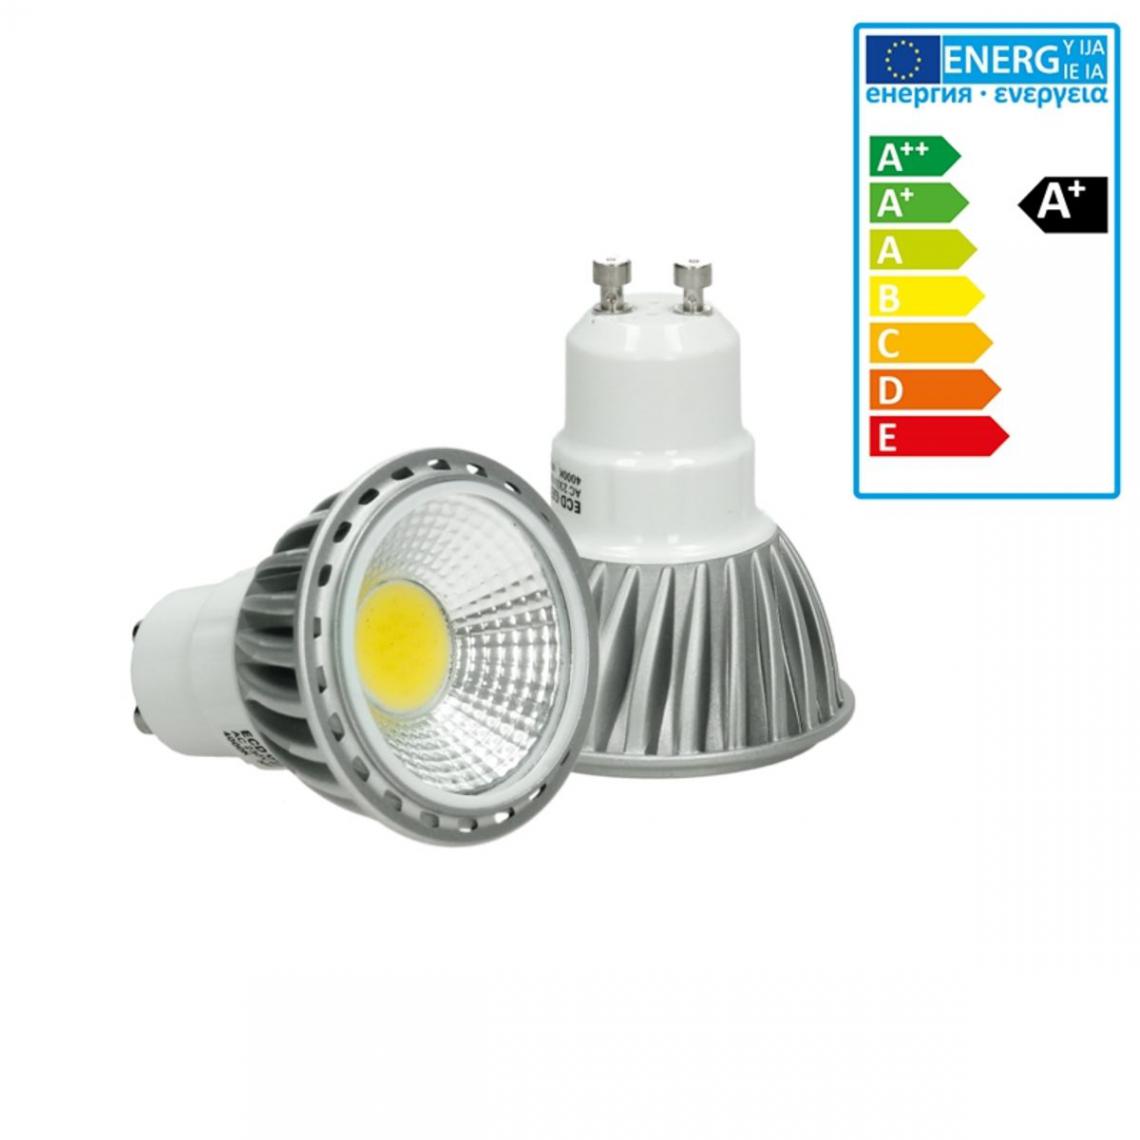 Ecd Germany - ECD Germany LED COB GU10 Spot Lampe Ampoule Blanc Chaud 6W - Ampoules LED